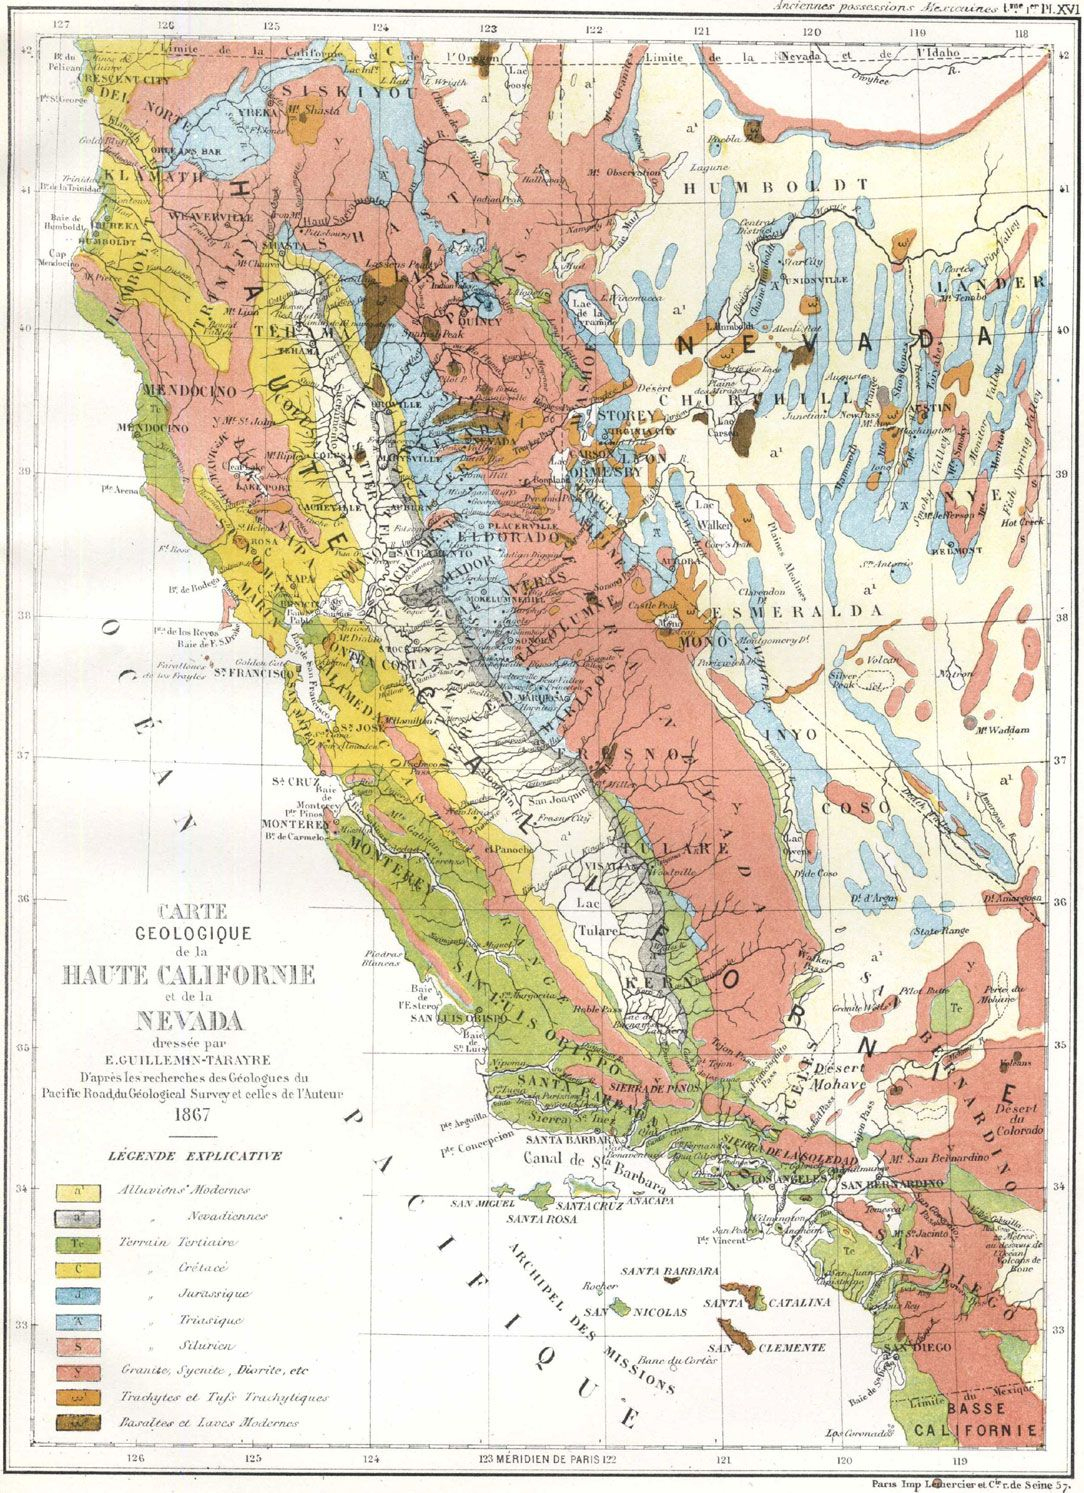 Geologic Maps | California Geological Survey - Geologic Maps Of - California Geological Survey Maps